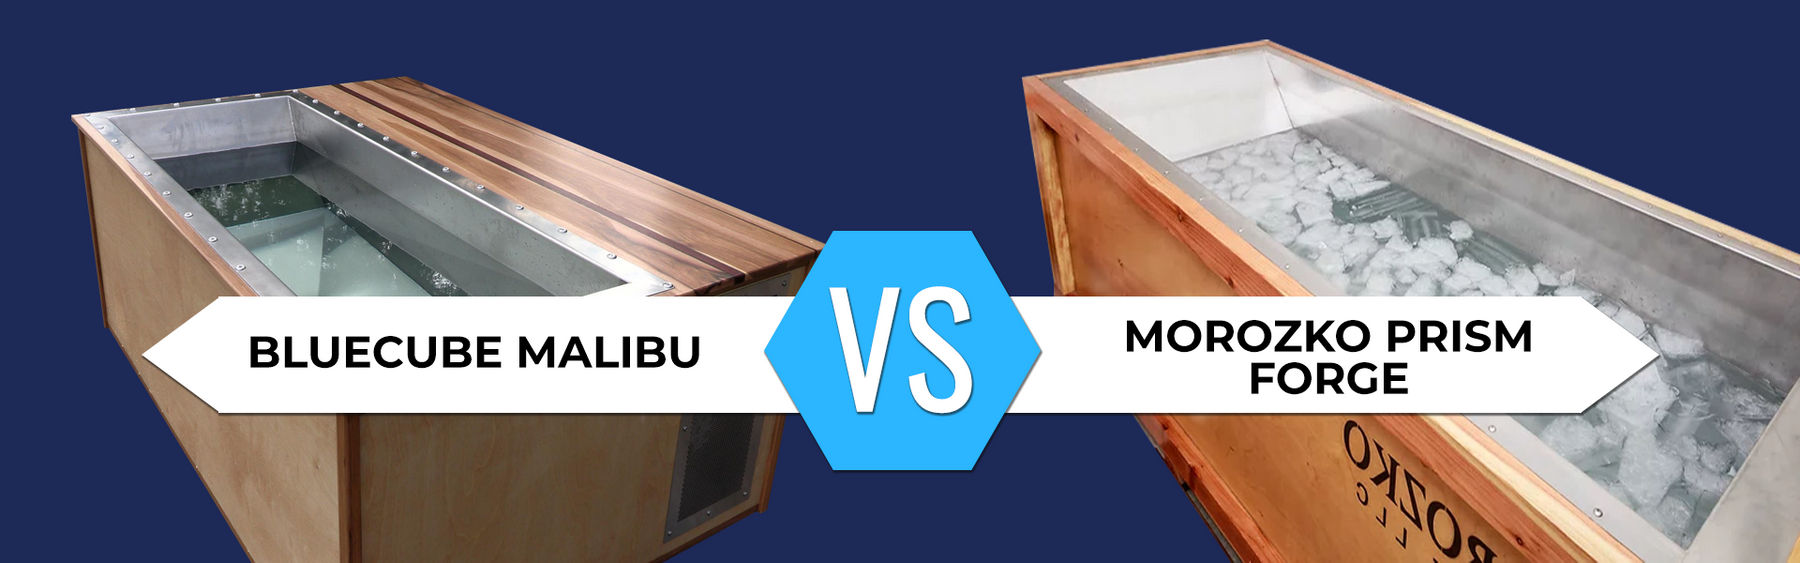 Morozko Prism Forge vs. BlueCube Malibu Ice Bath